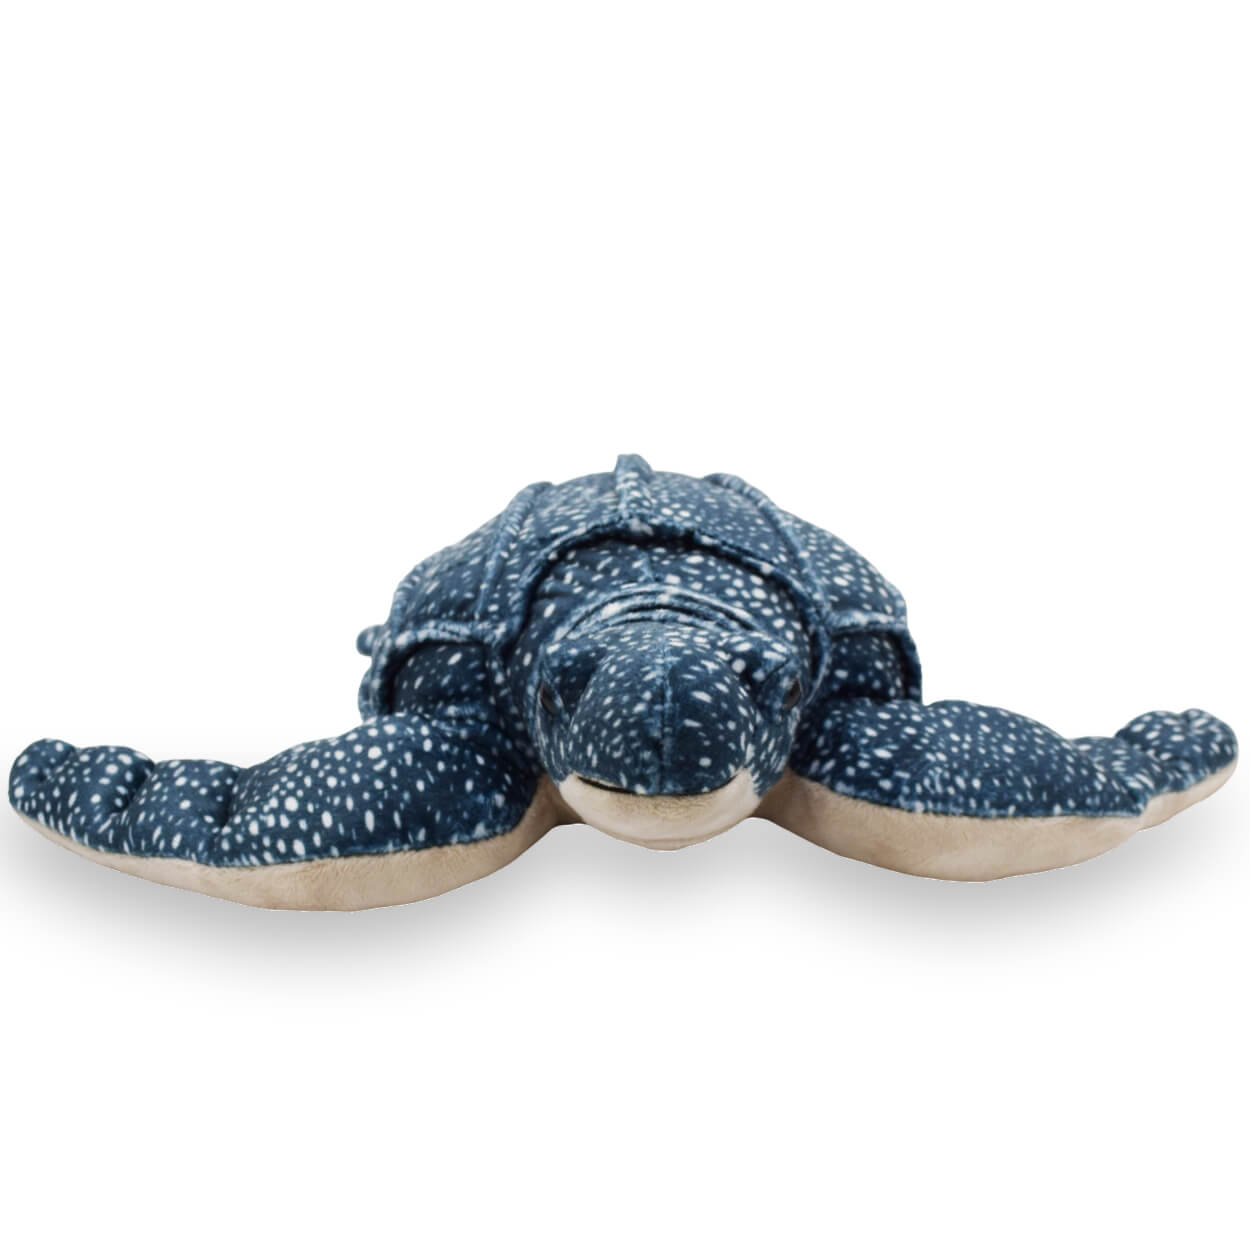 Realistic Leatherback Sea Turtle Stuffed Animal Plush Toy